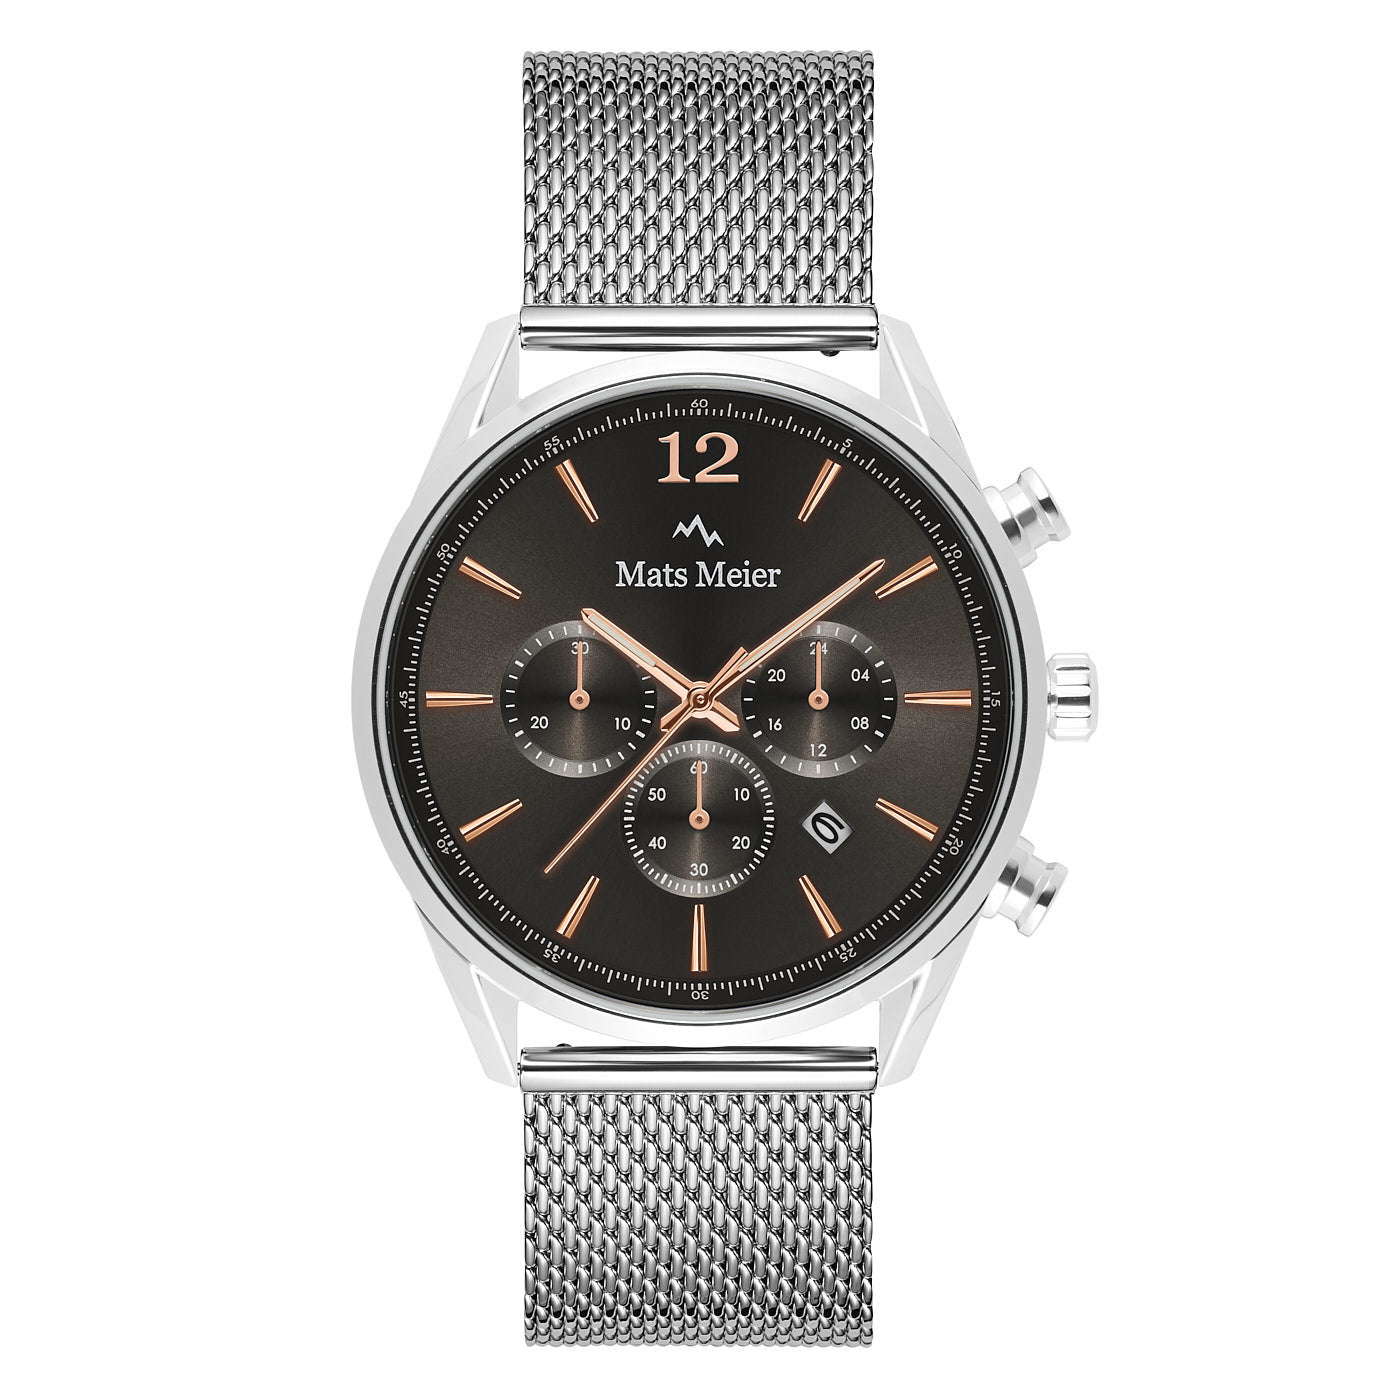 Grand Cornier cronografo grigio / color argento